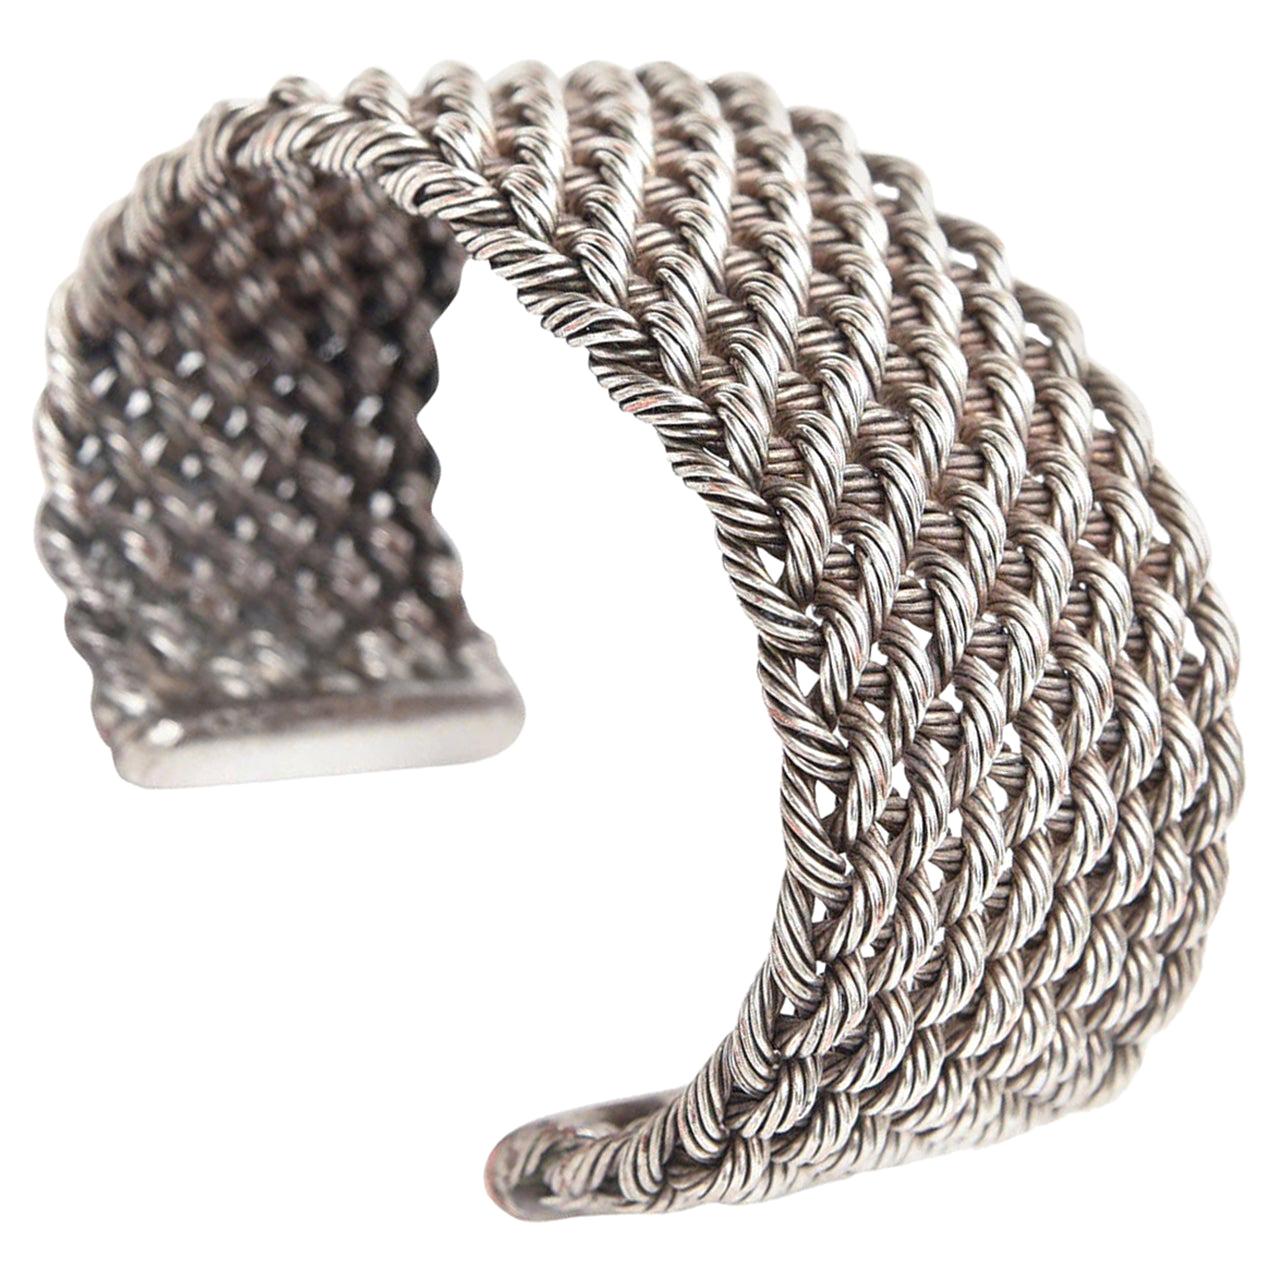 Criss Cross Braided Sterling Silver Cuff Bracelet